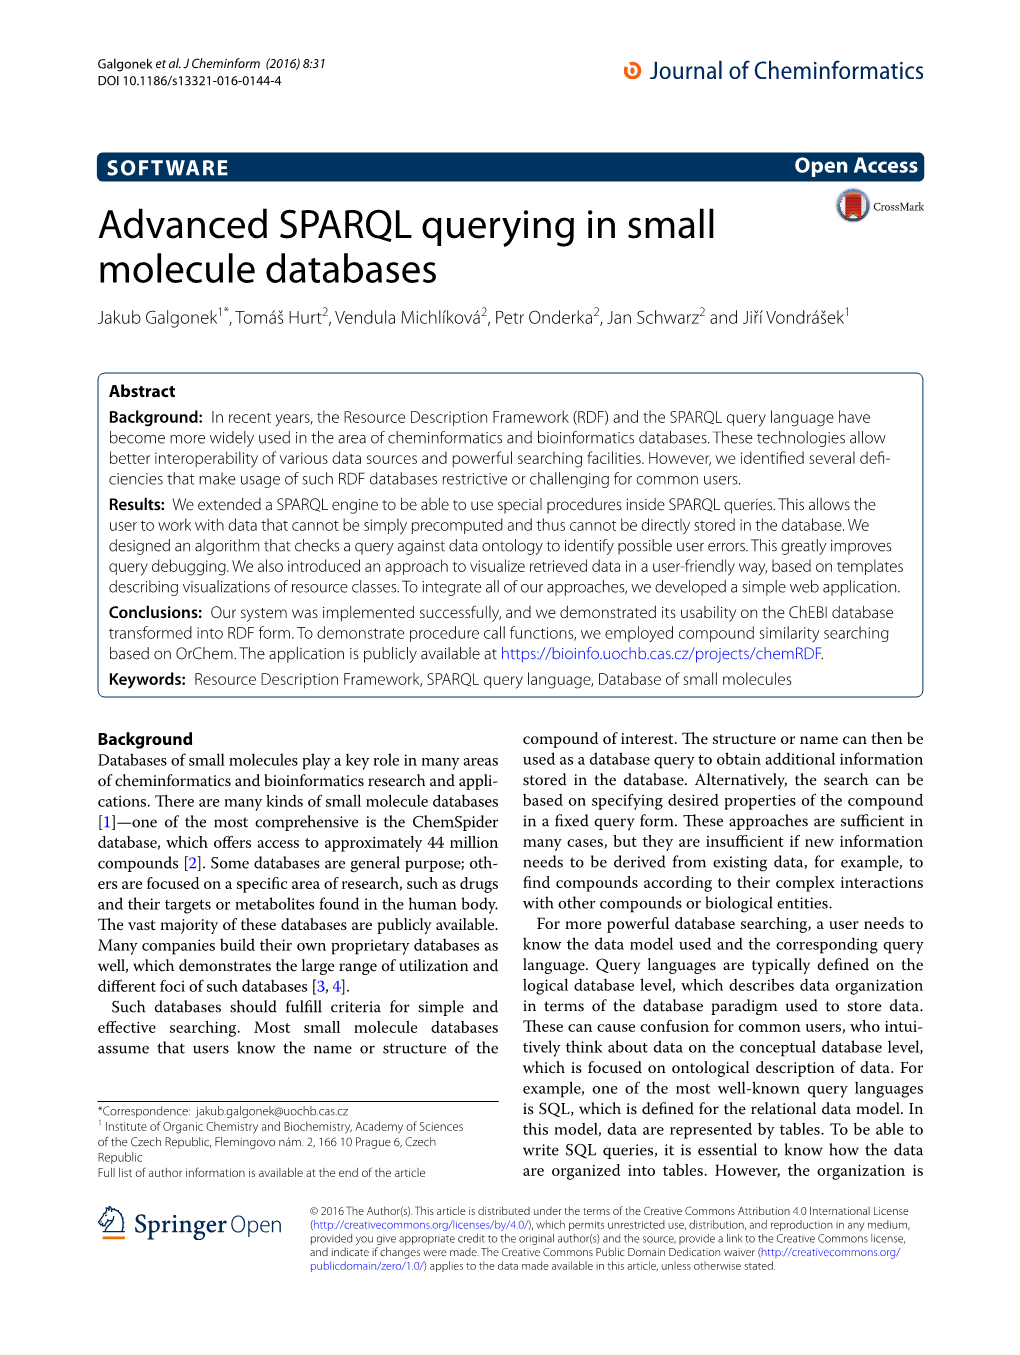 Advanced SPARQL Querying in Small Molecule Databases Jakub Galgonek1*, Tomáš Hurt2, Vendula Michlíková2, Petr Onderka2, Jan Schwarz2 and Jiří Vondrášek1